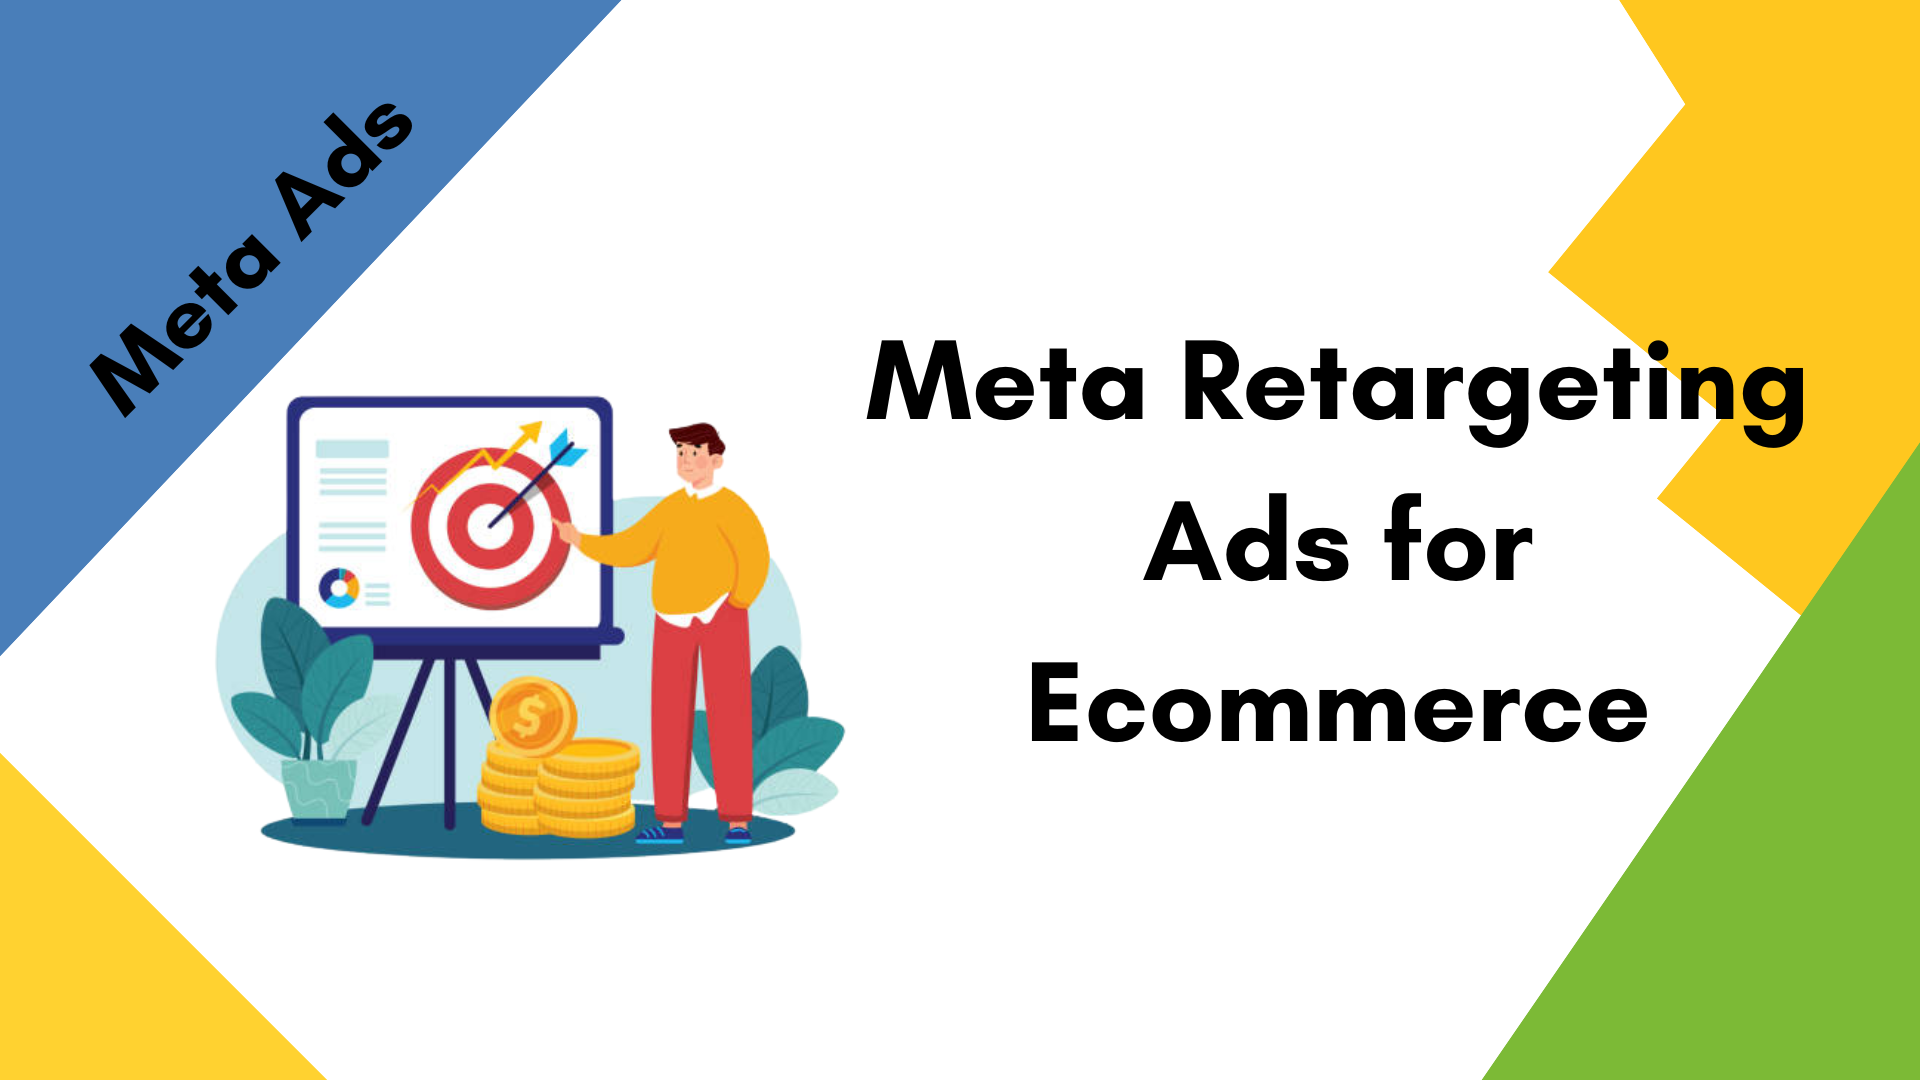 Meta Ads retargeting for Ecommerce